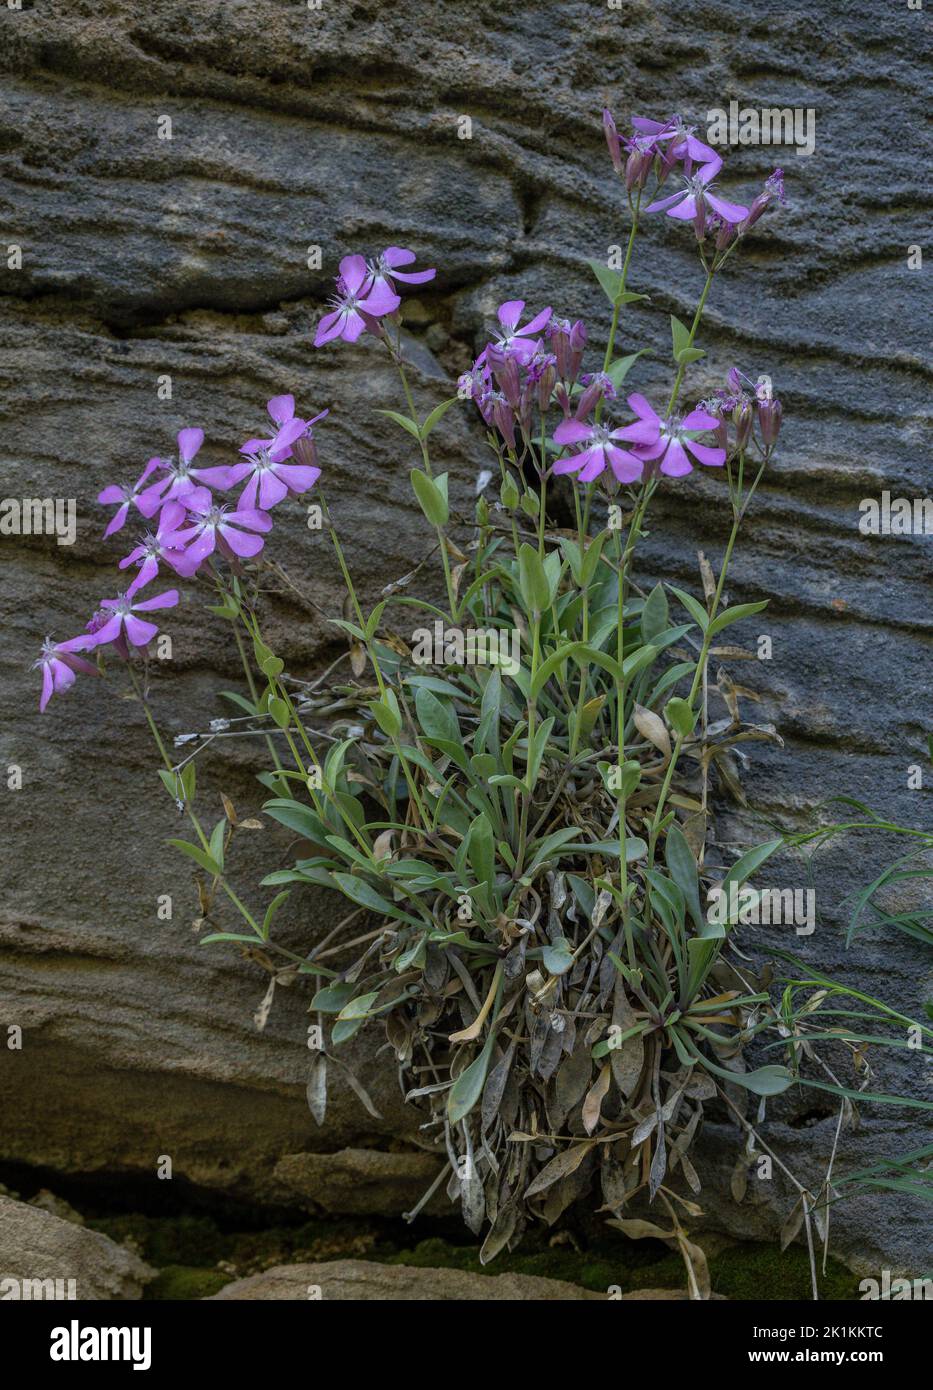 An endemic campion or Petrocoptis, Silene montserratii subsp. crassifolia, on limestone cliff. Anisclo Gorge, Pyrenees, Spain. Stock Photo